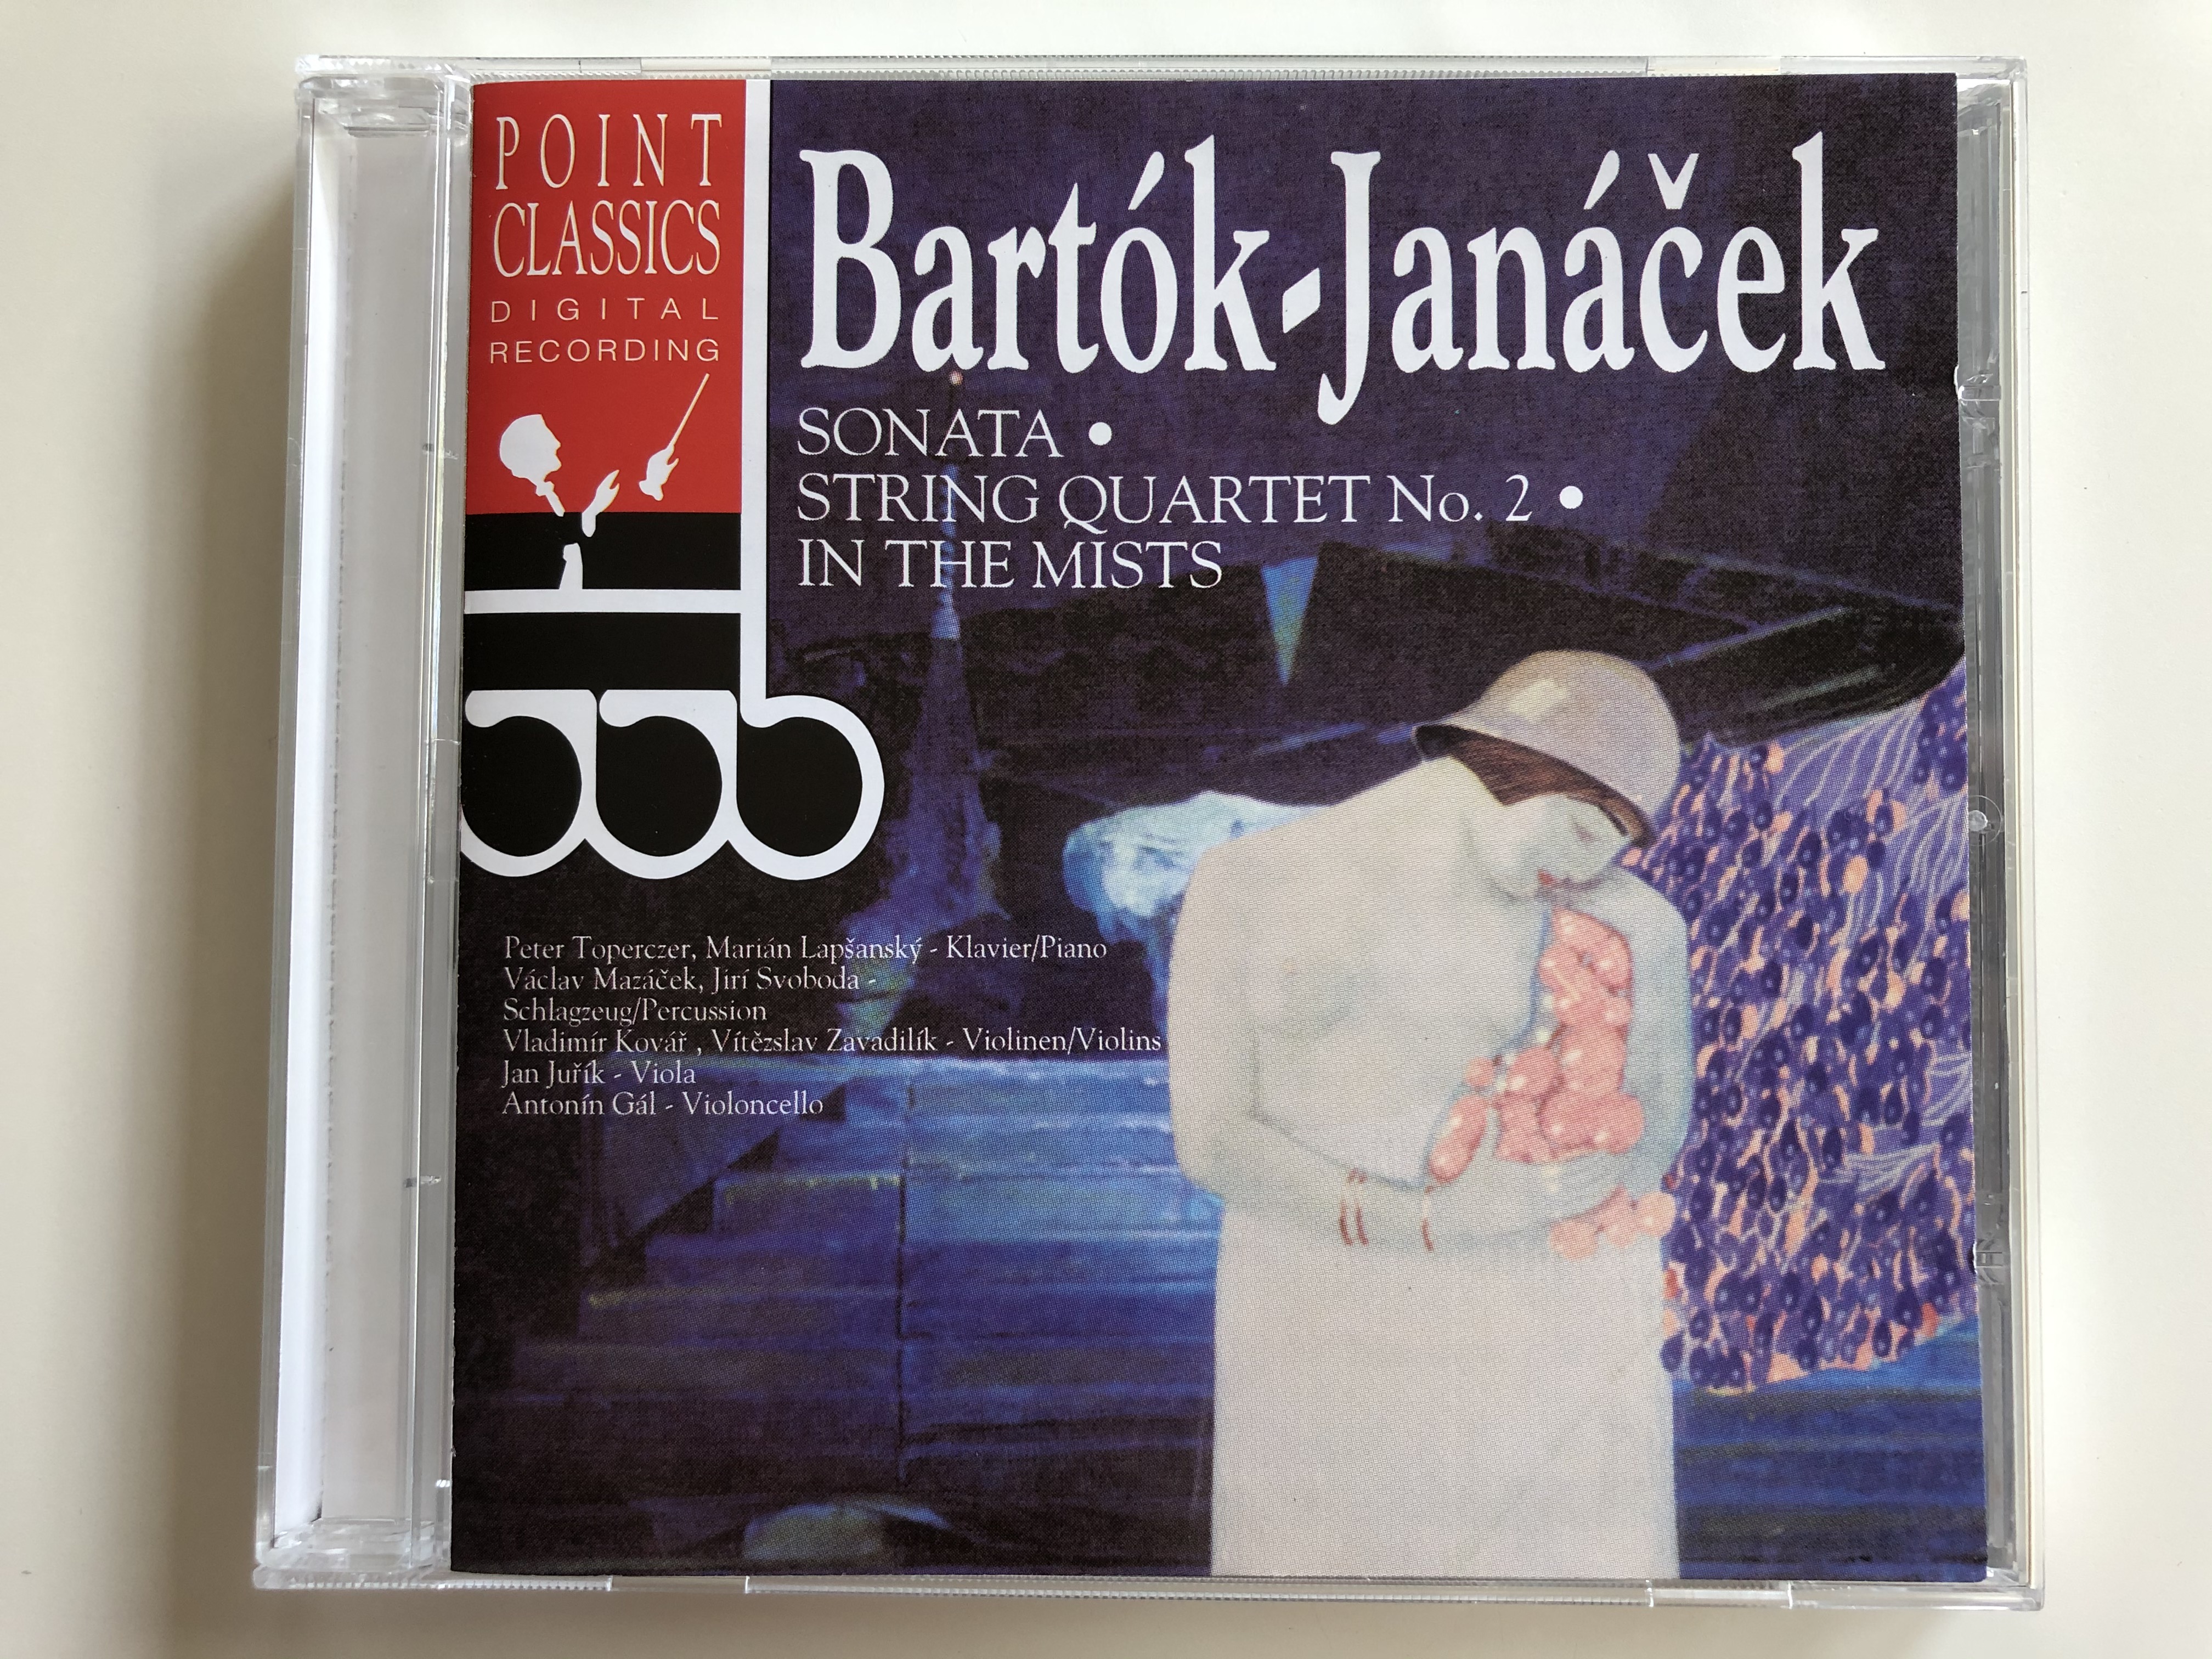 bartok-jana-ek-sonata-string-quartet-no.-2-in-the-mists-point-classics-audio-cd-1996-2672652-1-.jpg